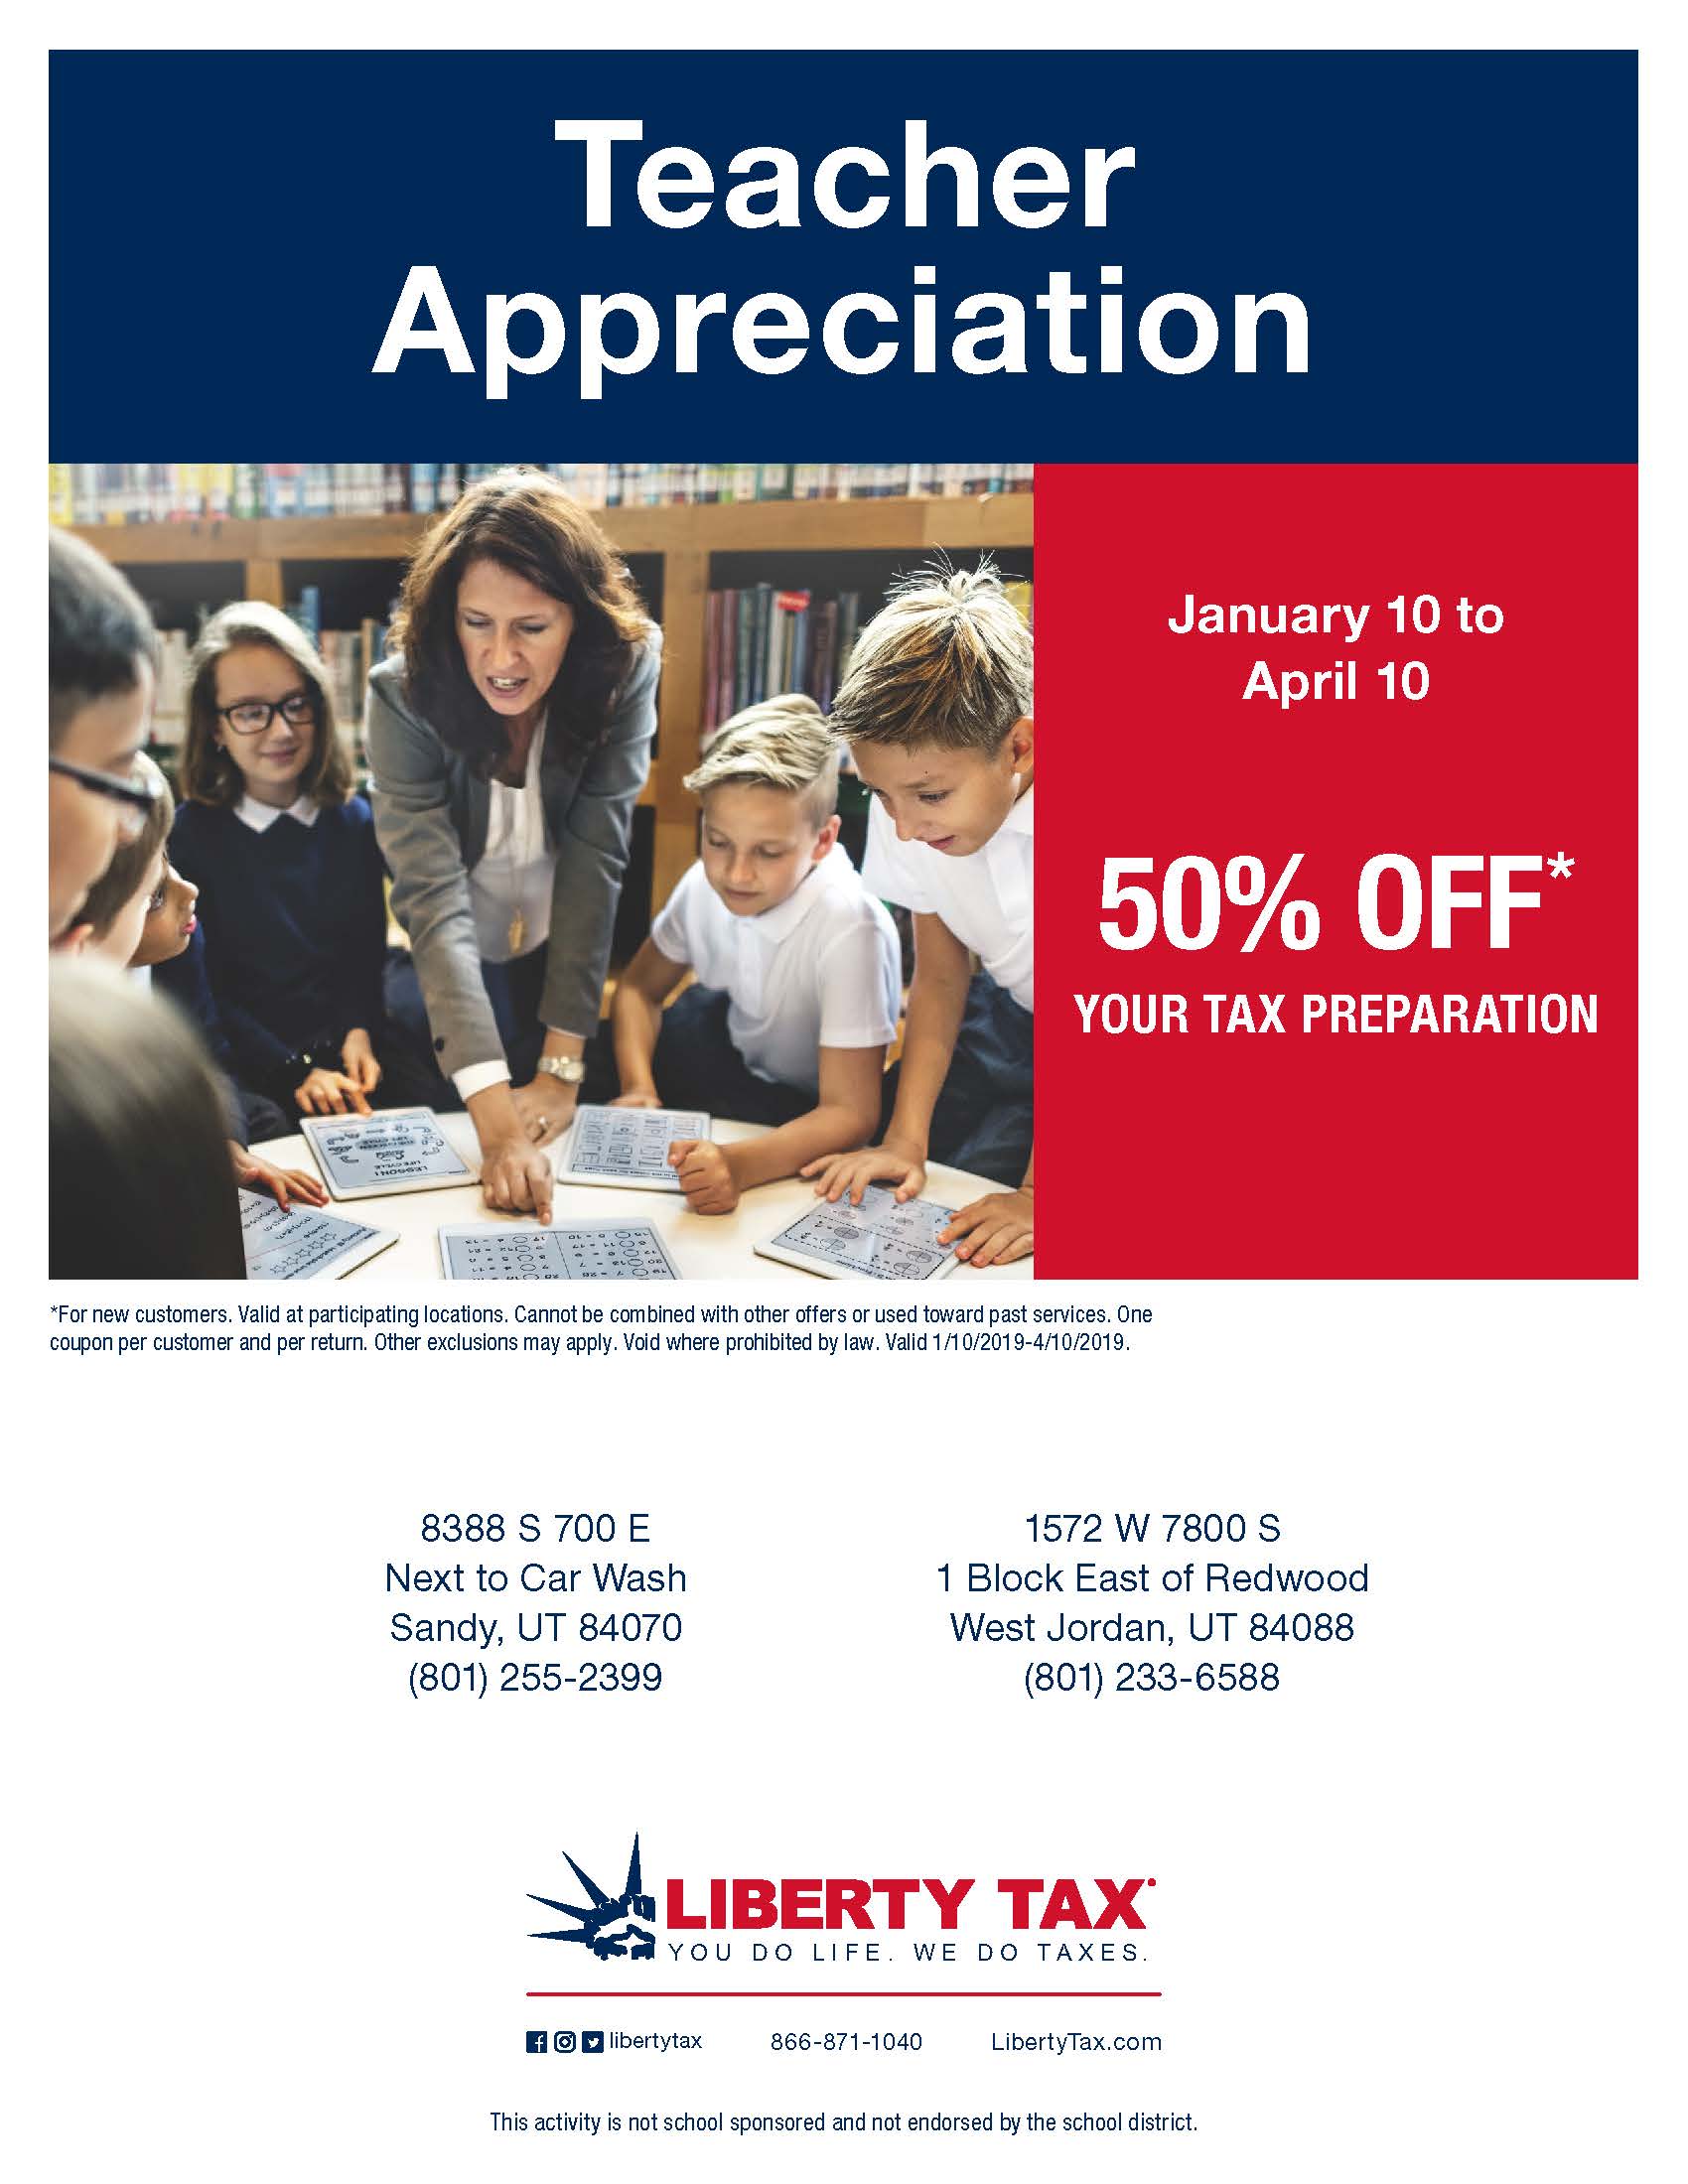 Teacher Appreciation | Jan. 10 - Apr. 10 | 50% Off Your Tax Preparation